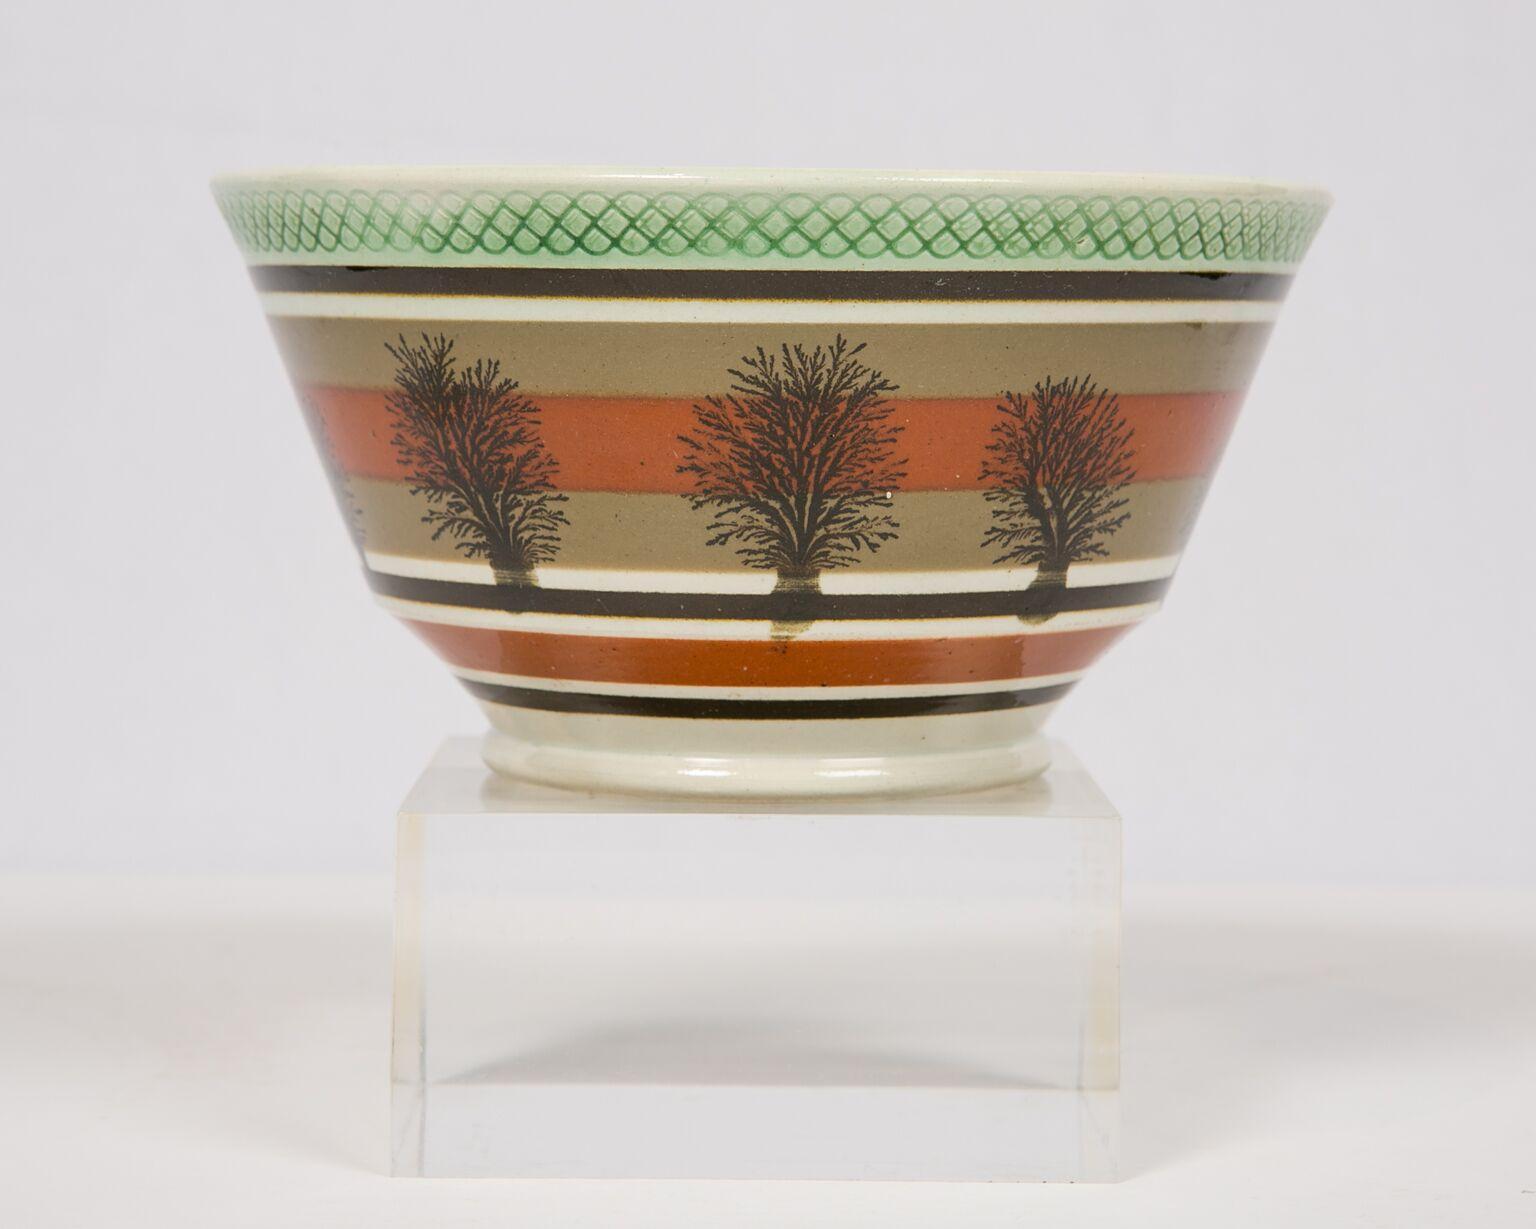 Glazed Mochaware Bowl Made in England, circa 1815